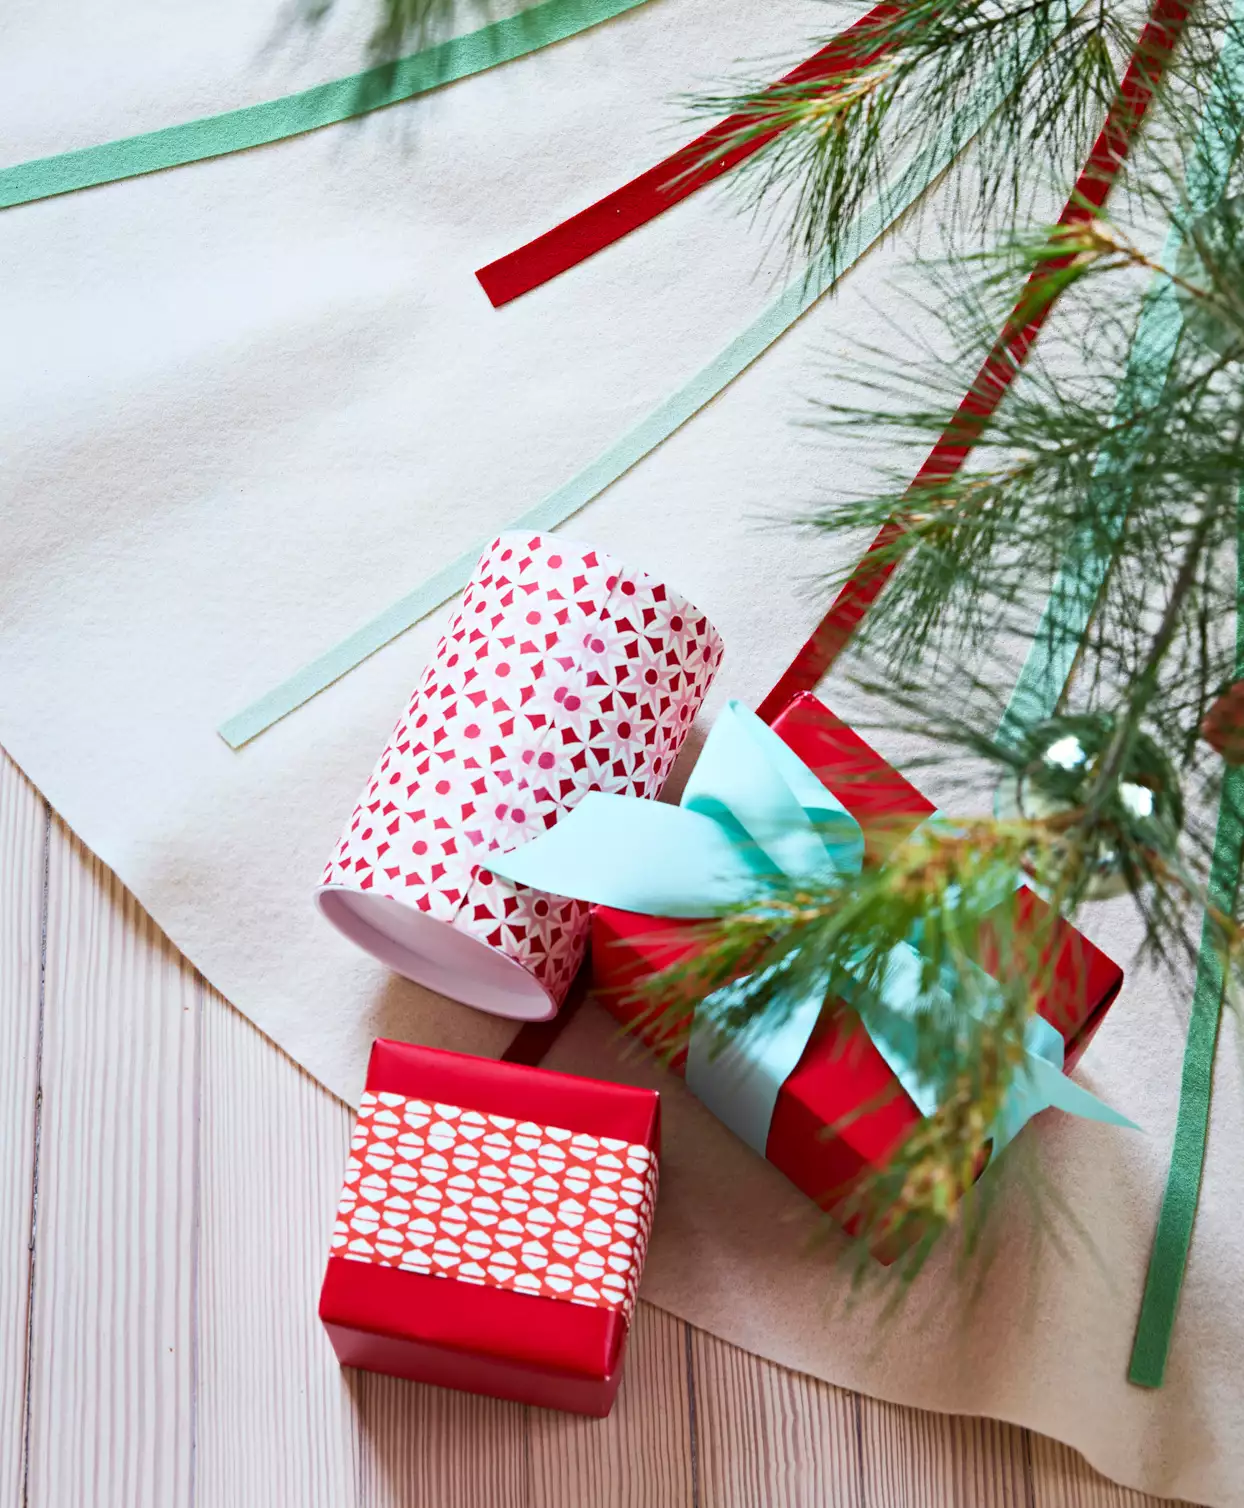 How to Make a No-Sew Christmas Tree Skirt Using Felt